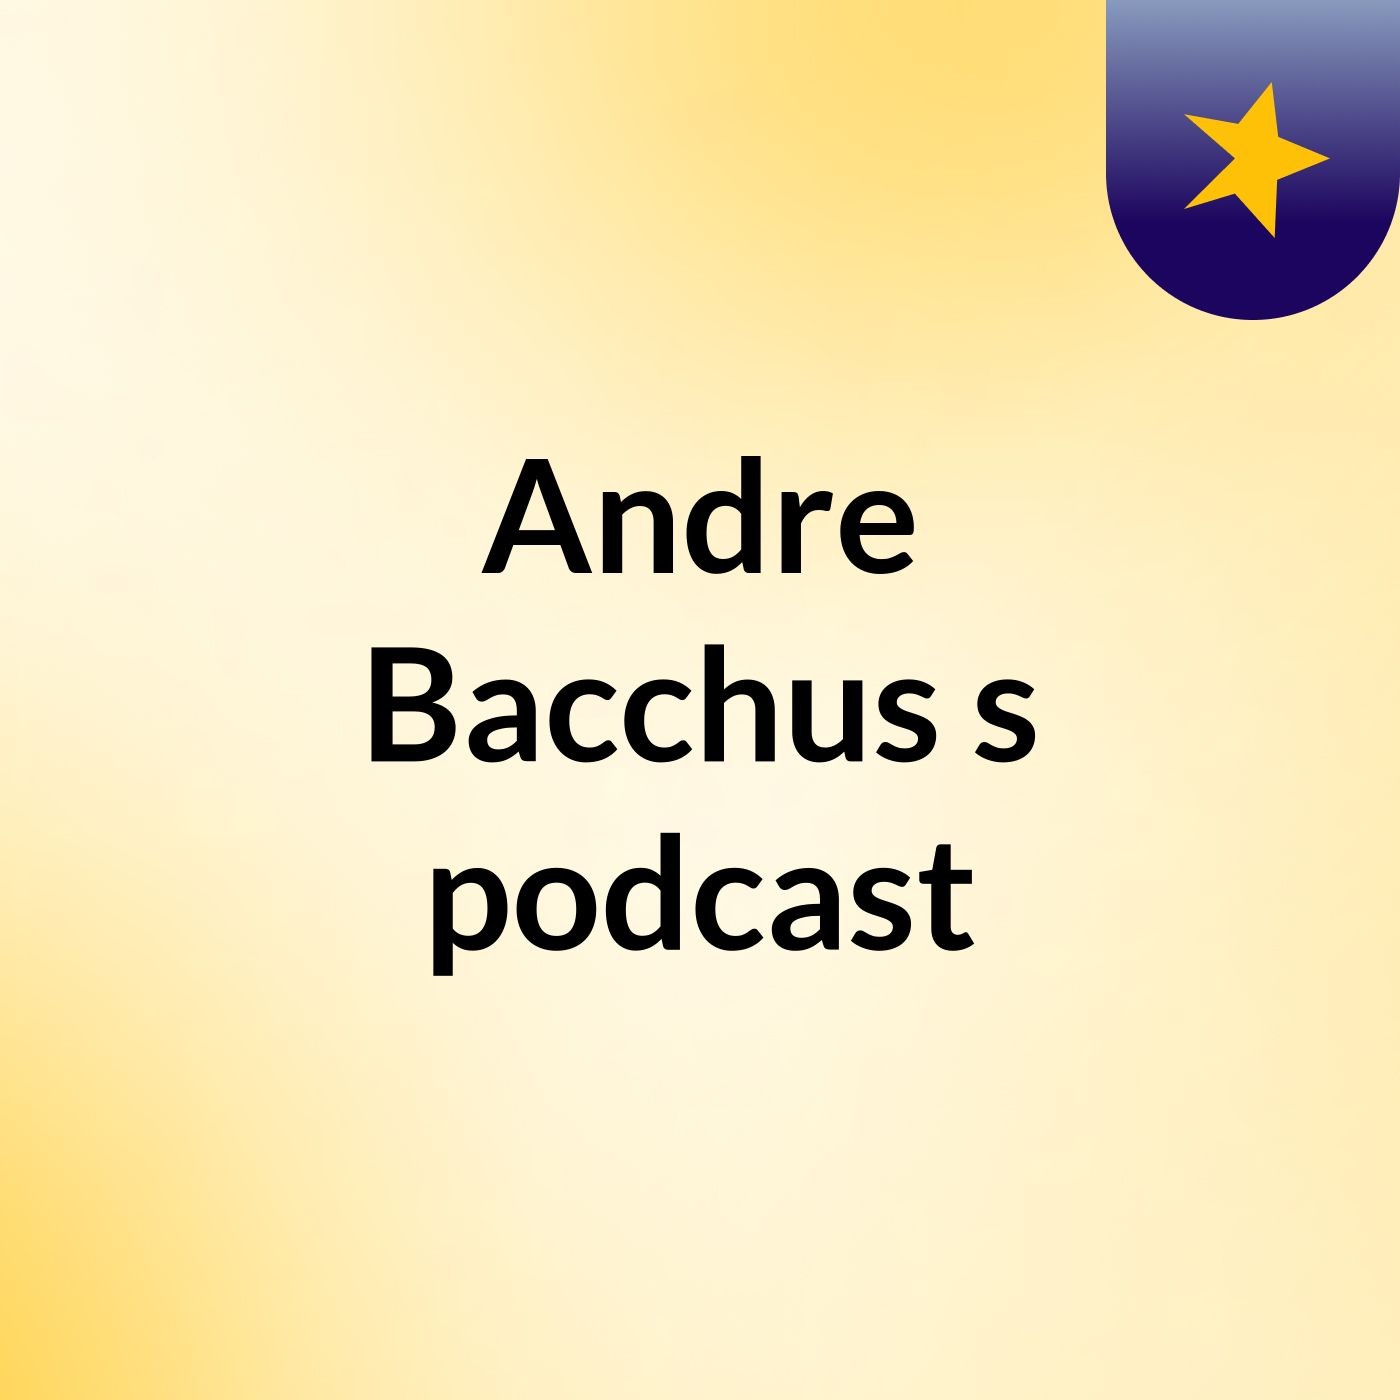 Episode 17 - Andre Bacchus's podcast